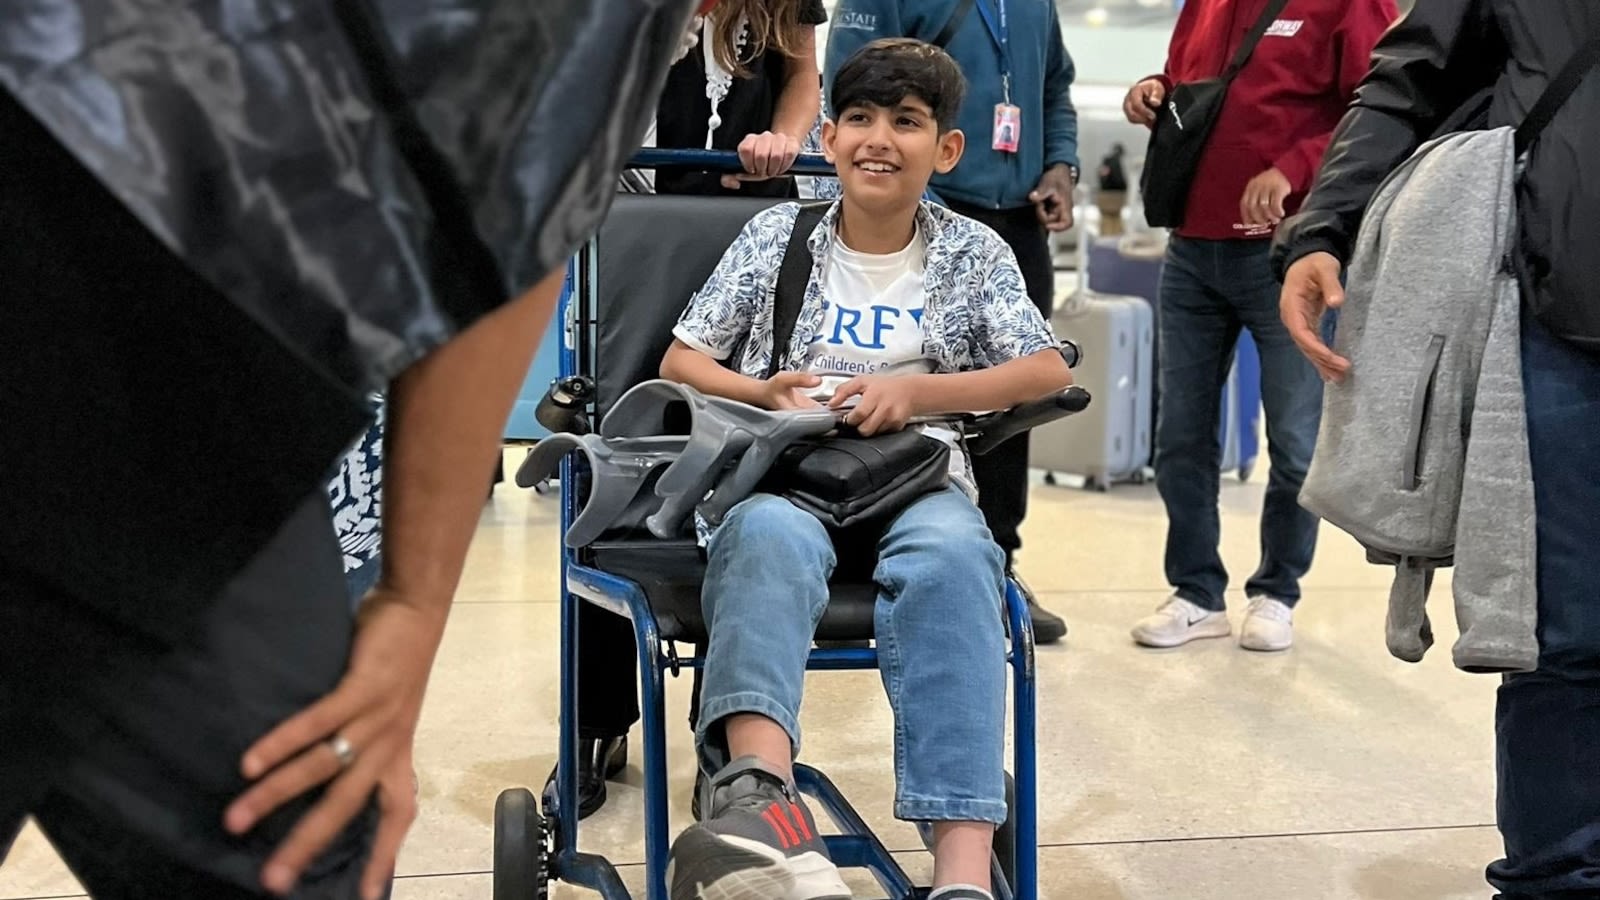 4 children injured in Gaza amid Israel-Hamas war arrive in US for medical treatment